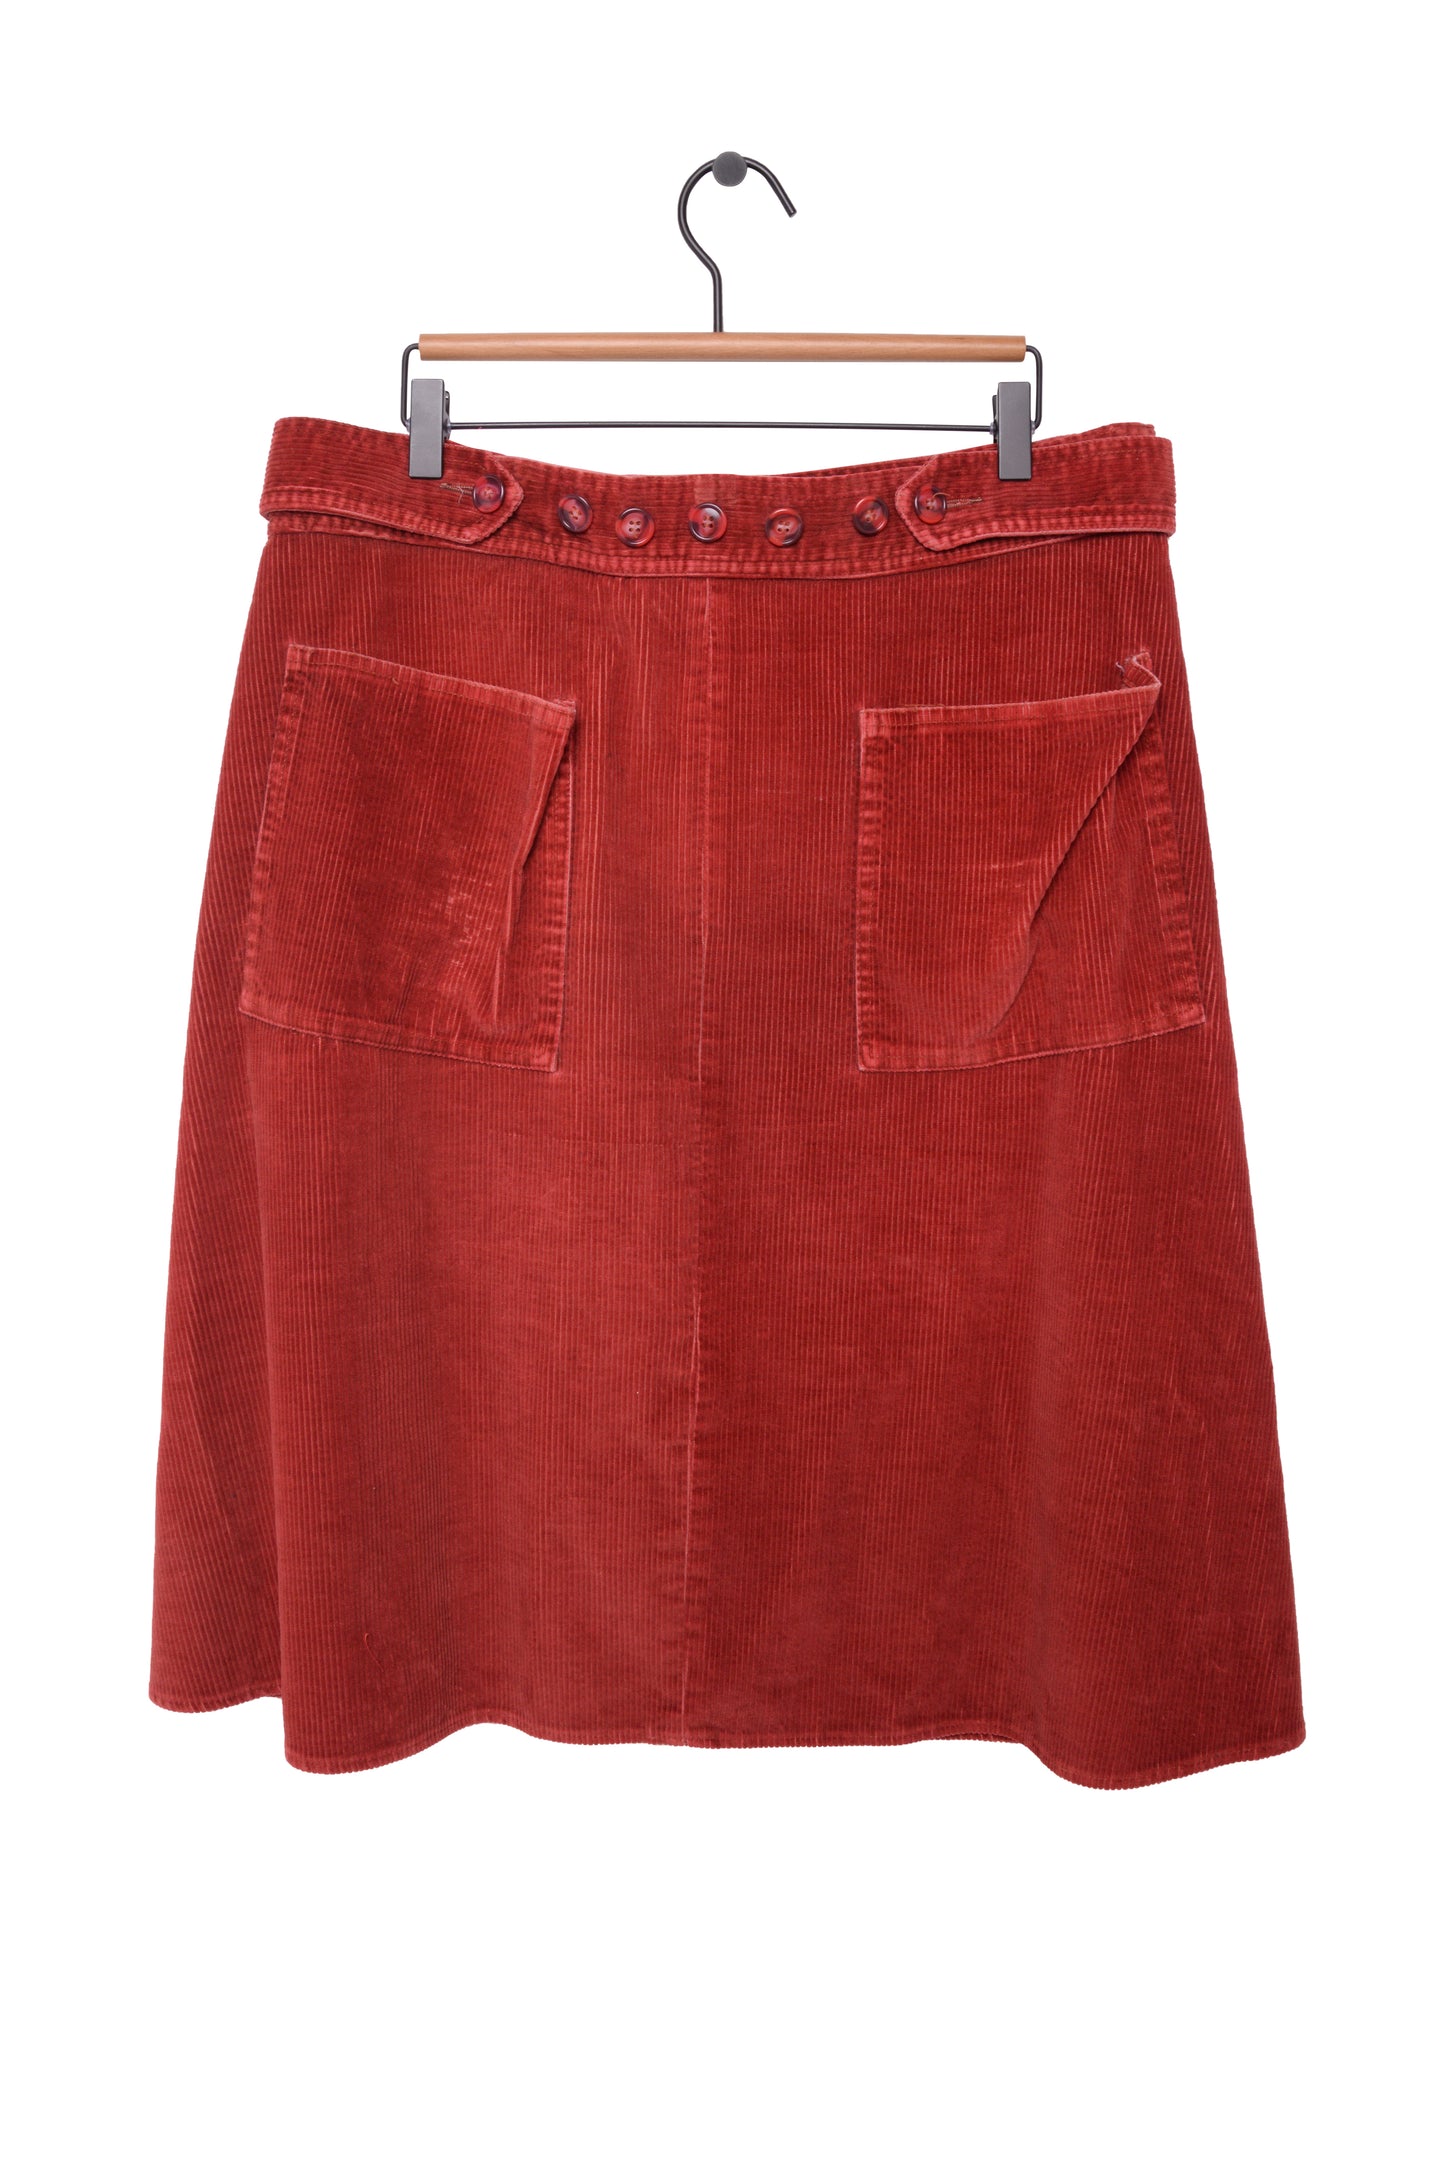 1950s Corduroy Mini Skirt